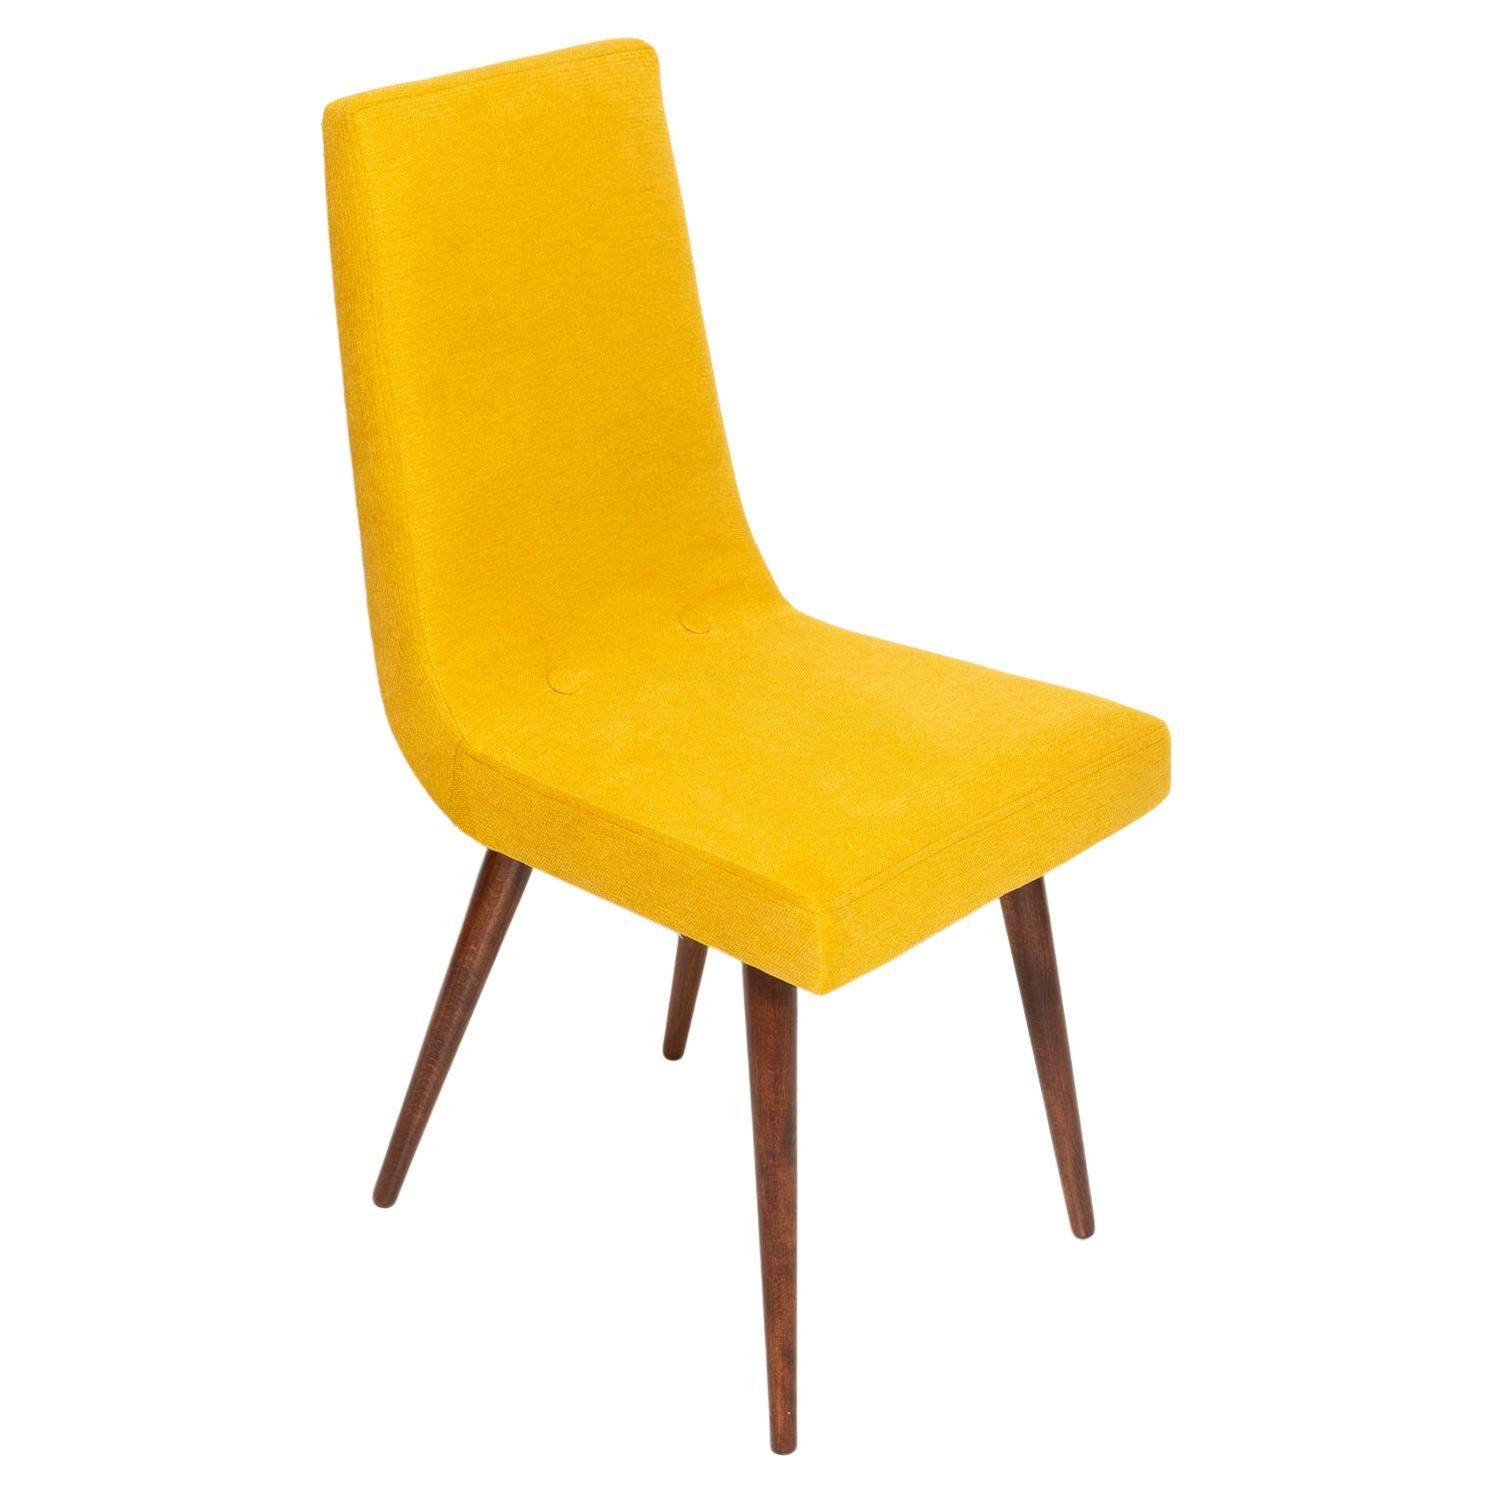 Midcentury Mustard Yellow Wool Chair, Rajmund Halas, Europe, 1960s For Sale